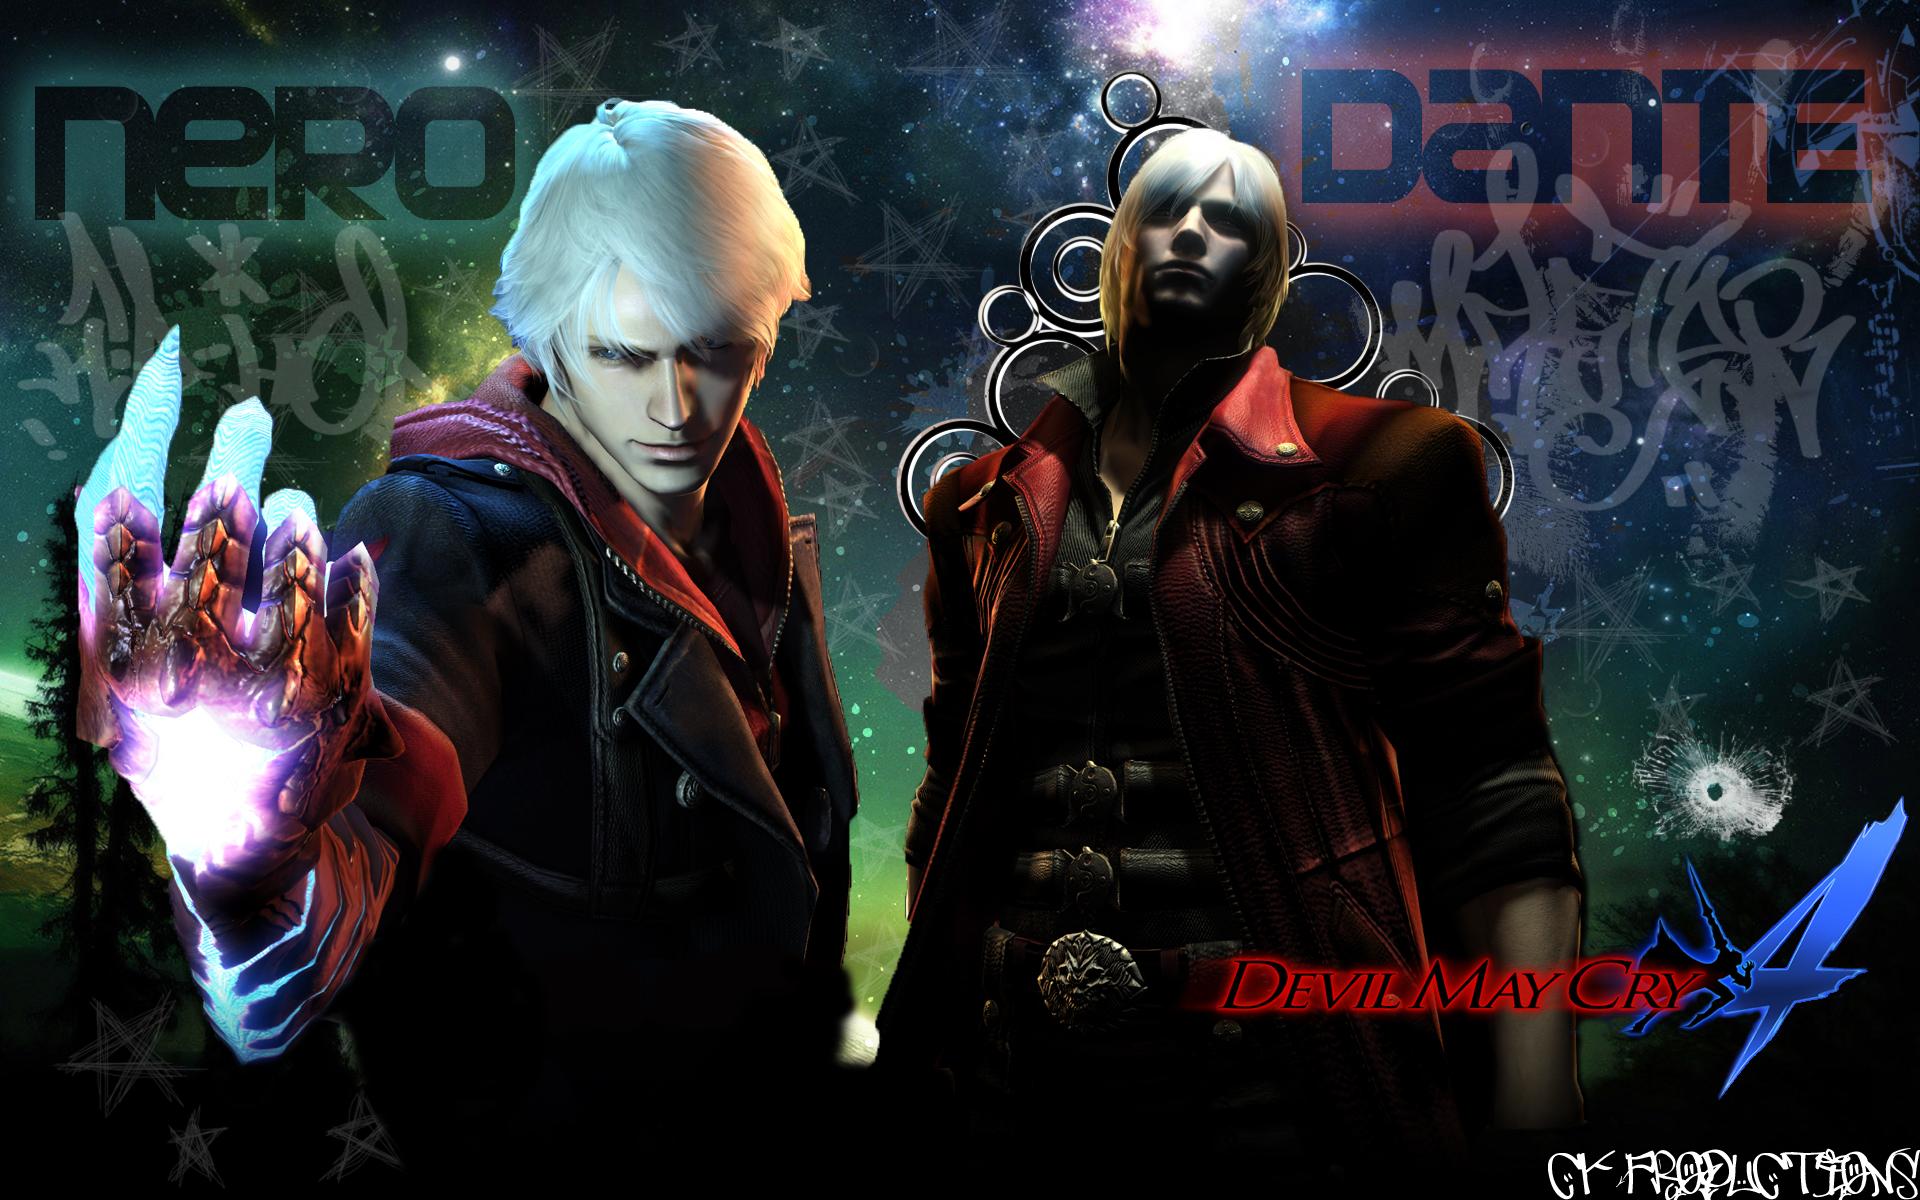 Devil May Cry 4 HD wallpapers, Desktop wallpaper - most viewed